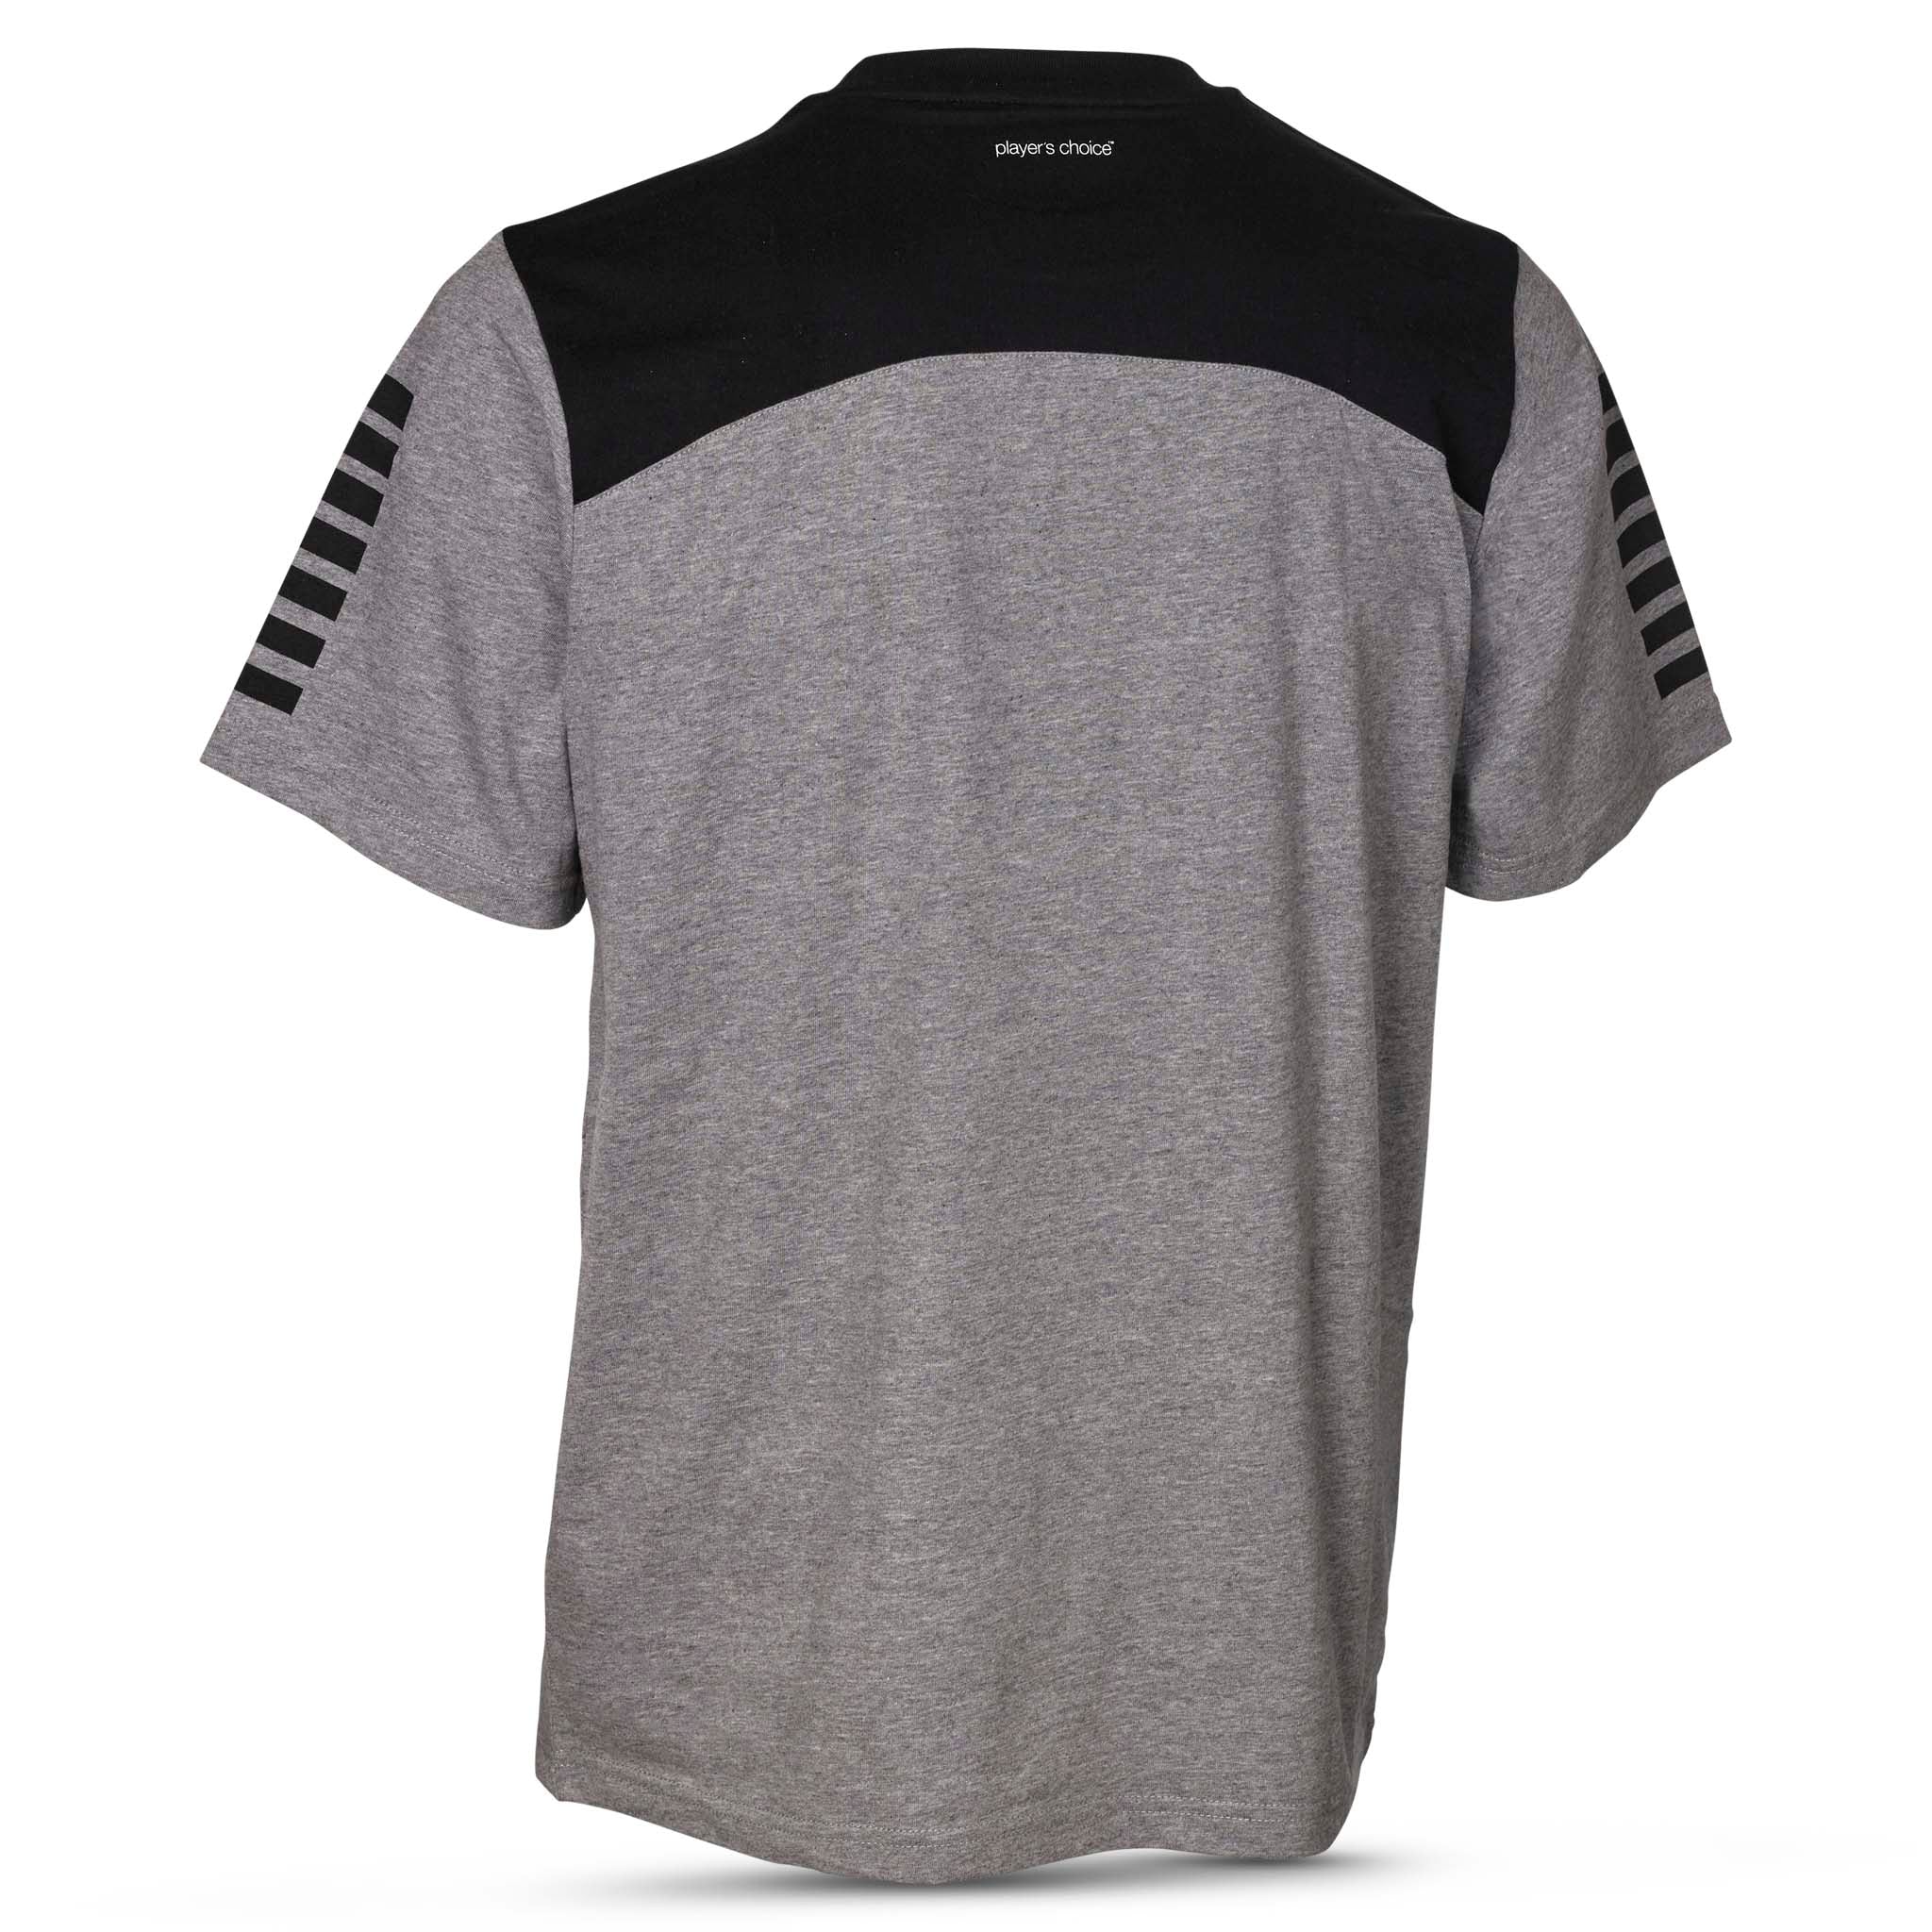 Oxford T-shirt #färg_grå/svart #färg_grå/svart